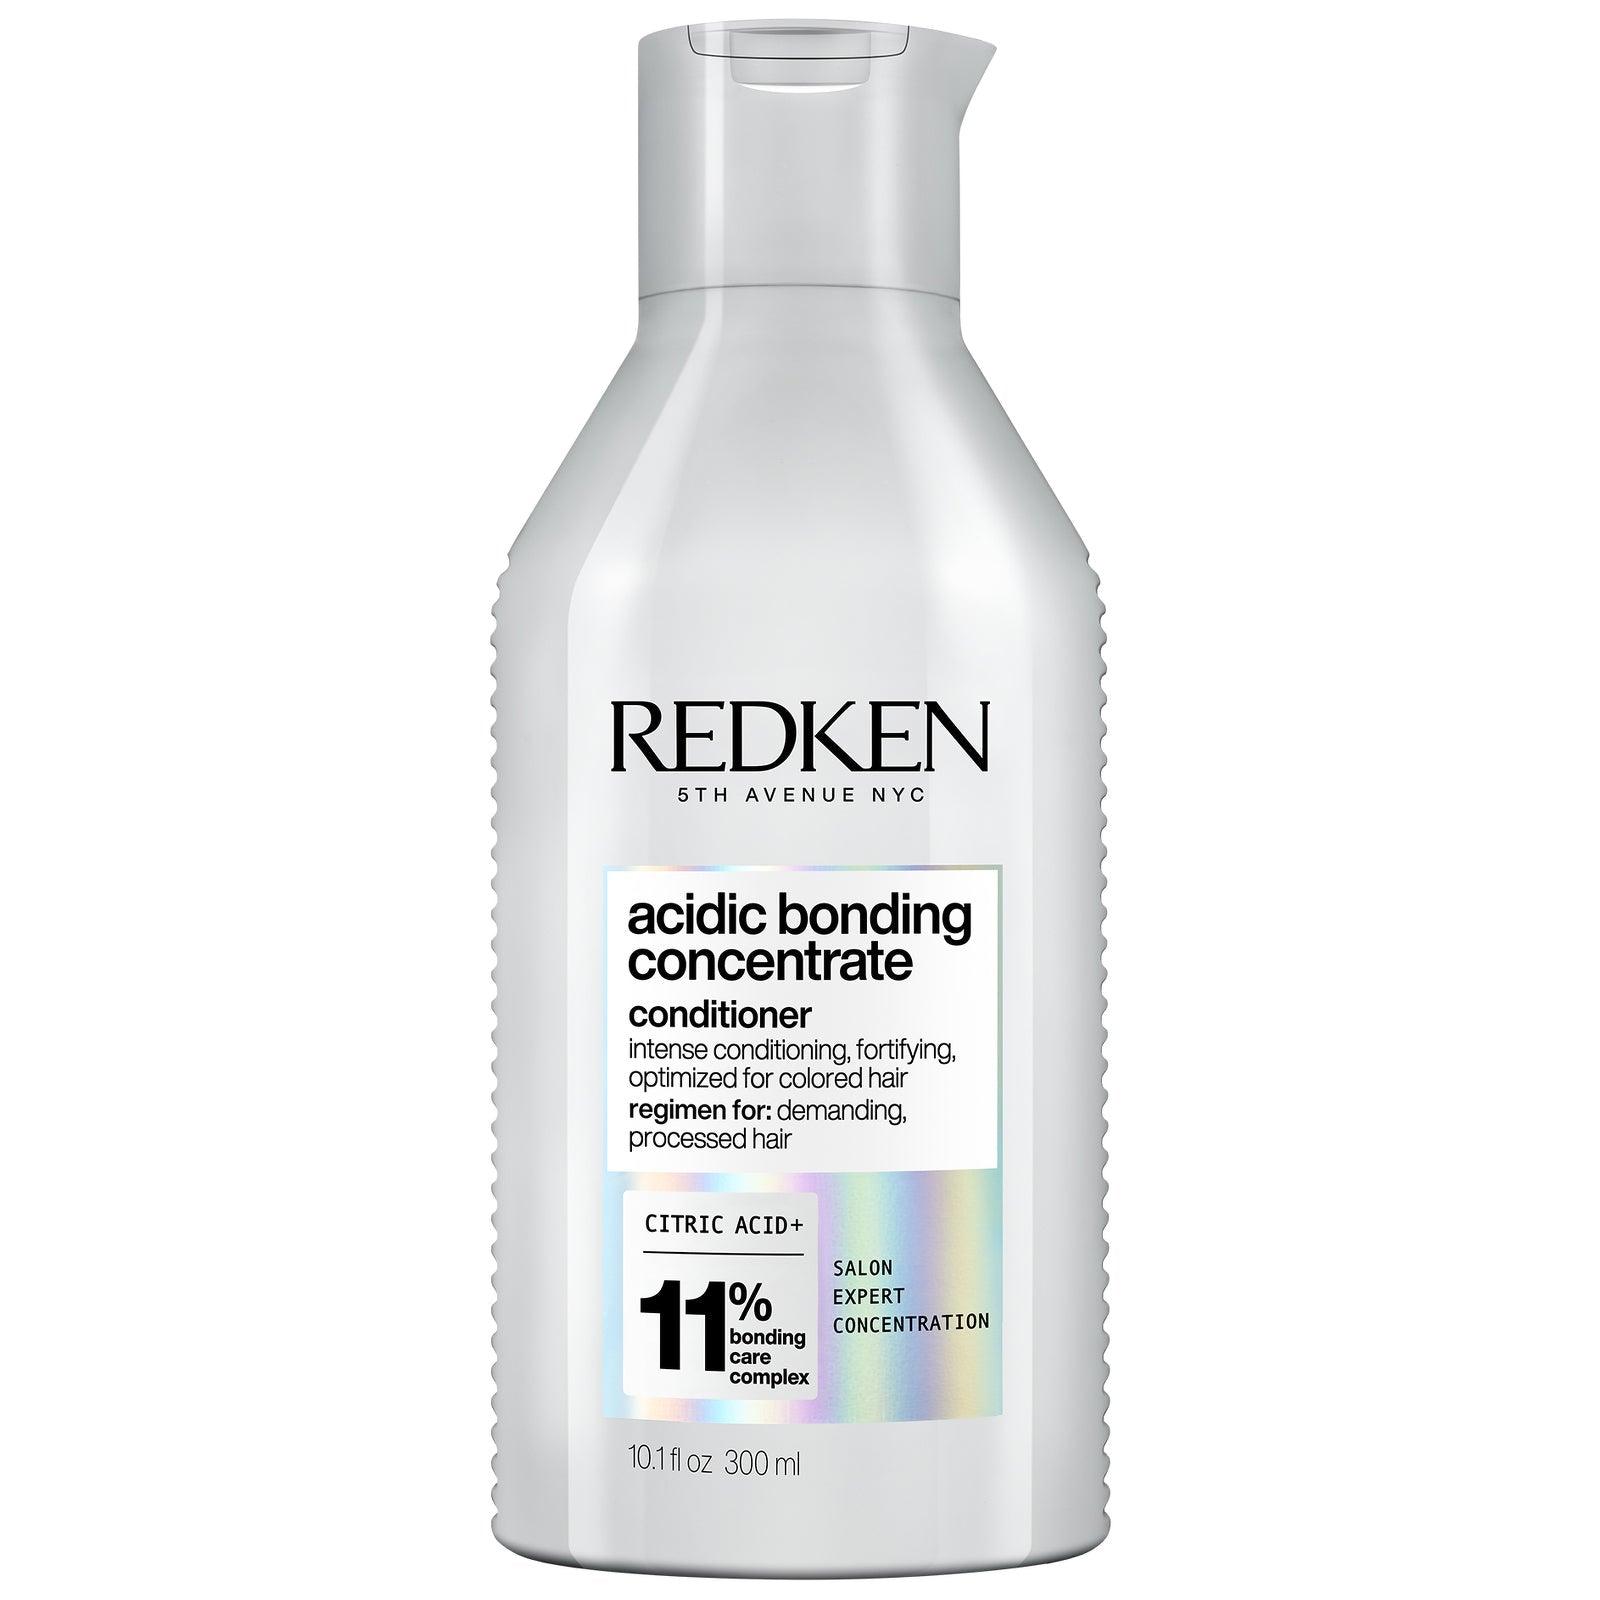 Redken Acidic Bonding Concentrate Conditioner 300ml - Redken